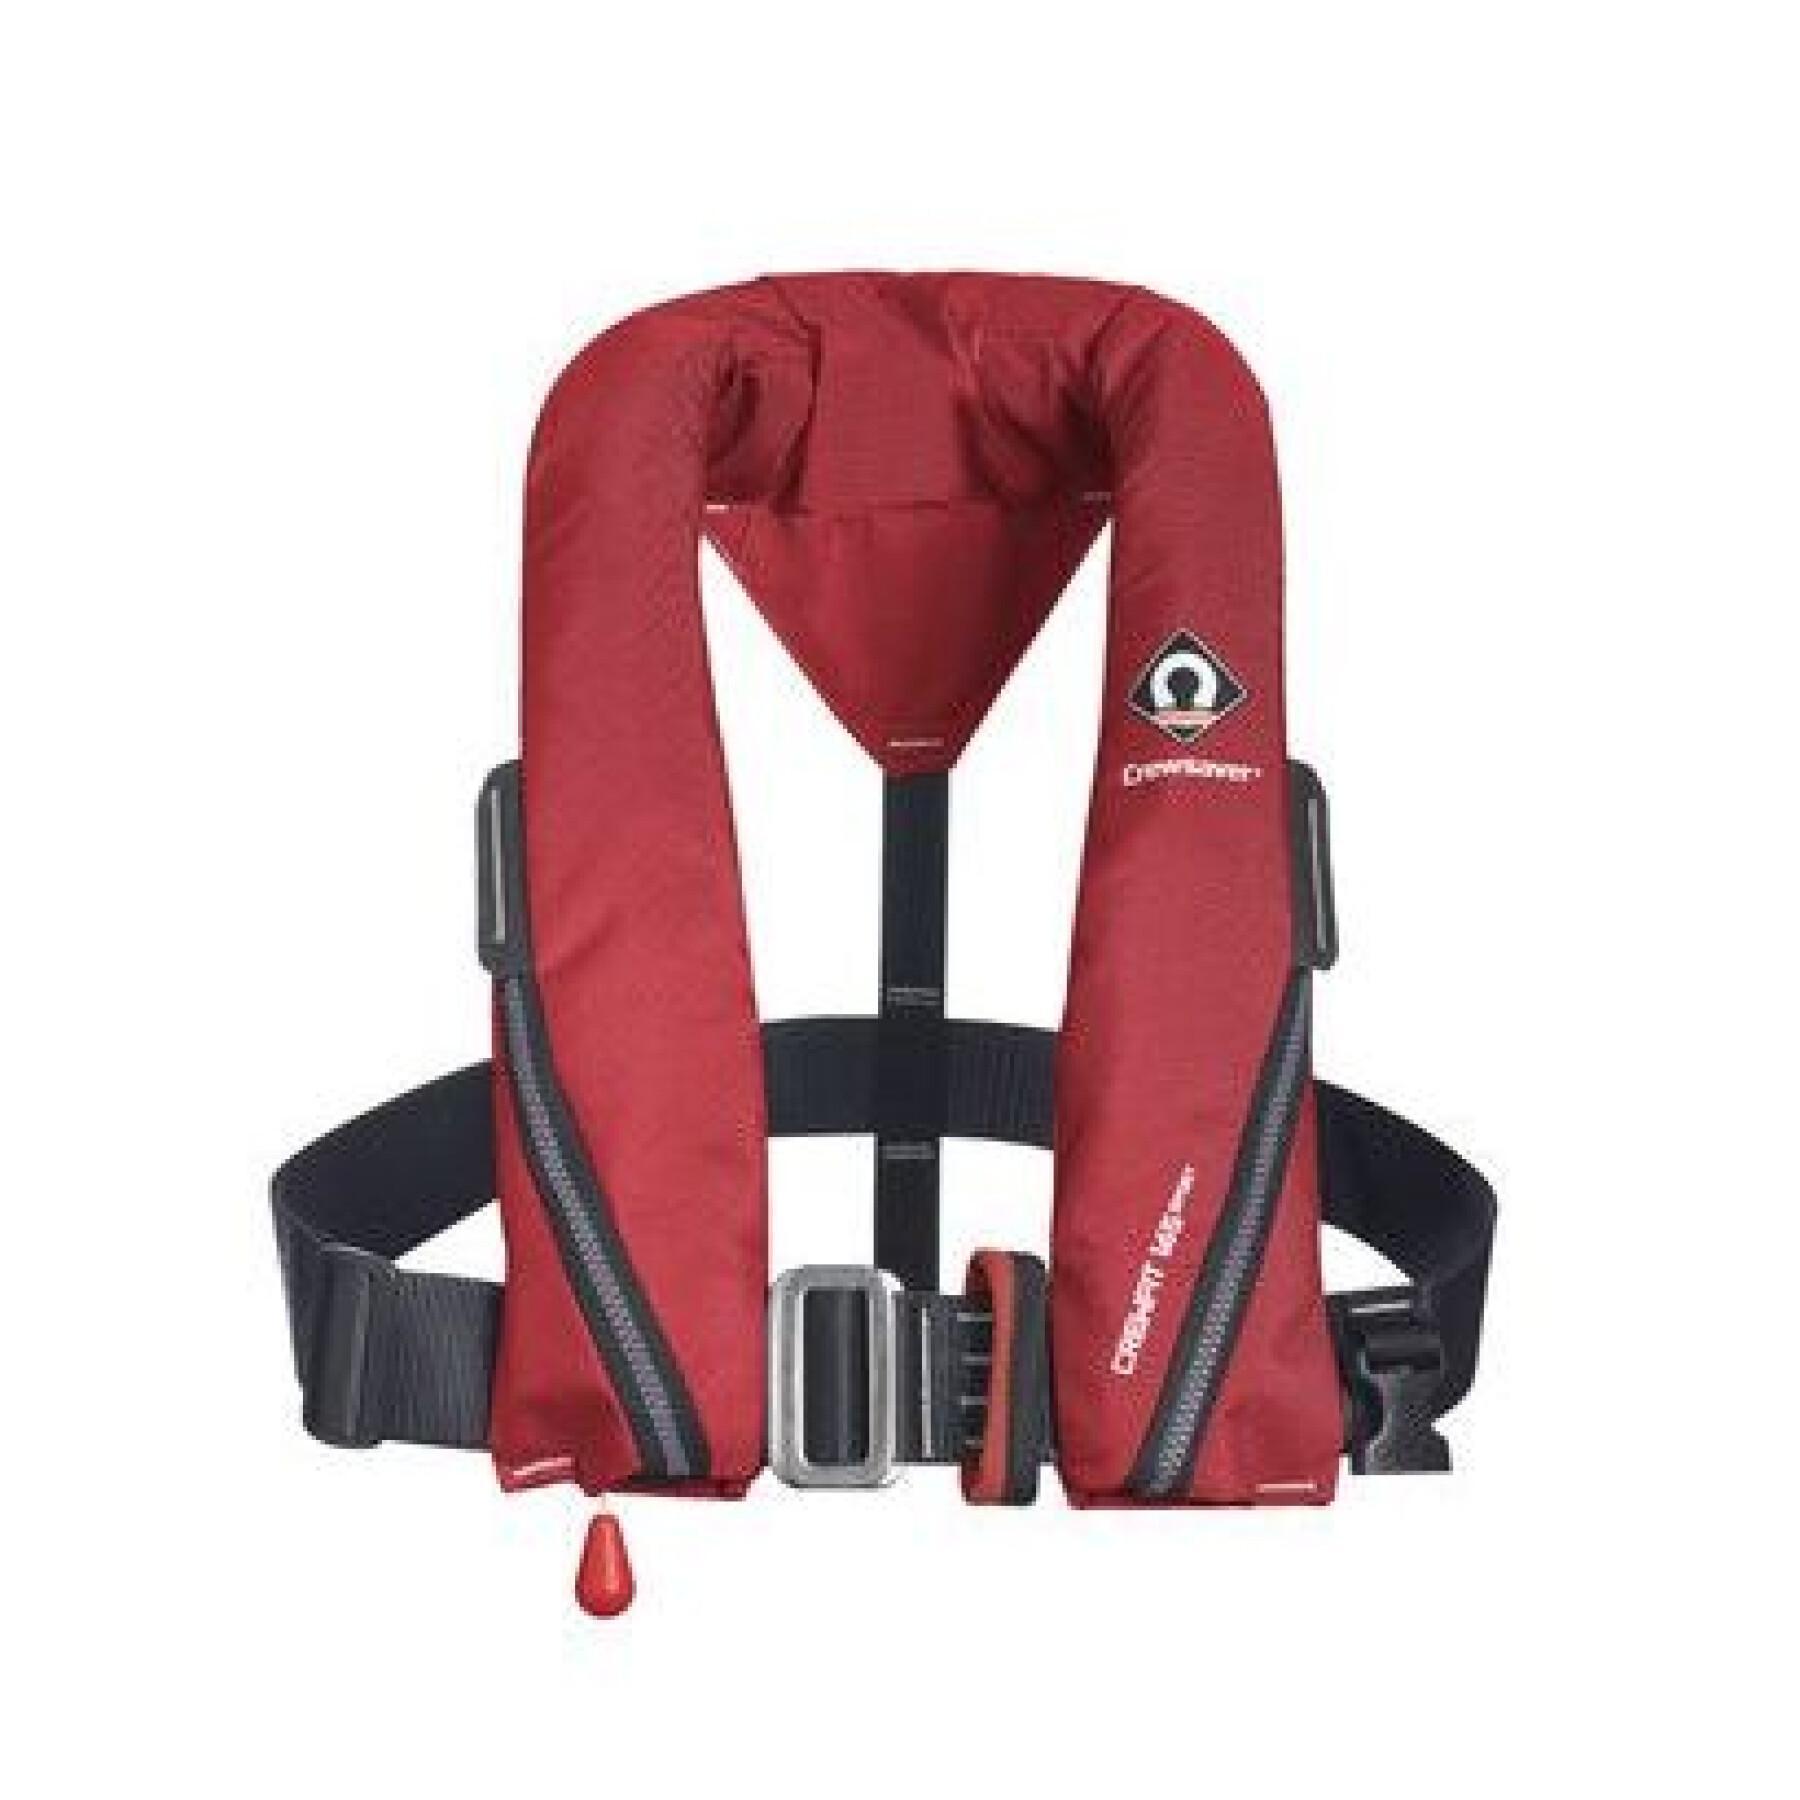 Manual lifejacket with harness Crewsaver Crewfit 165N